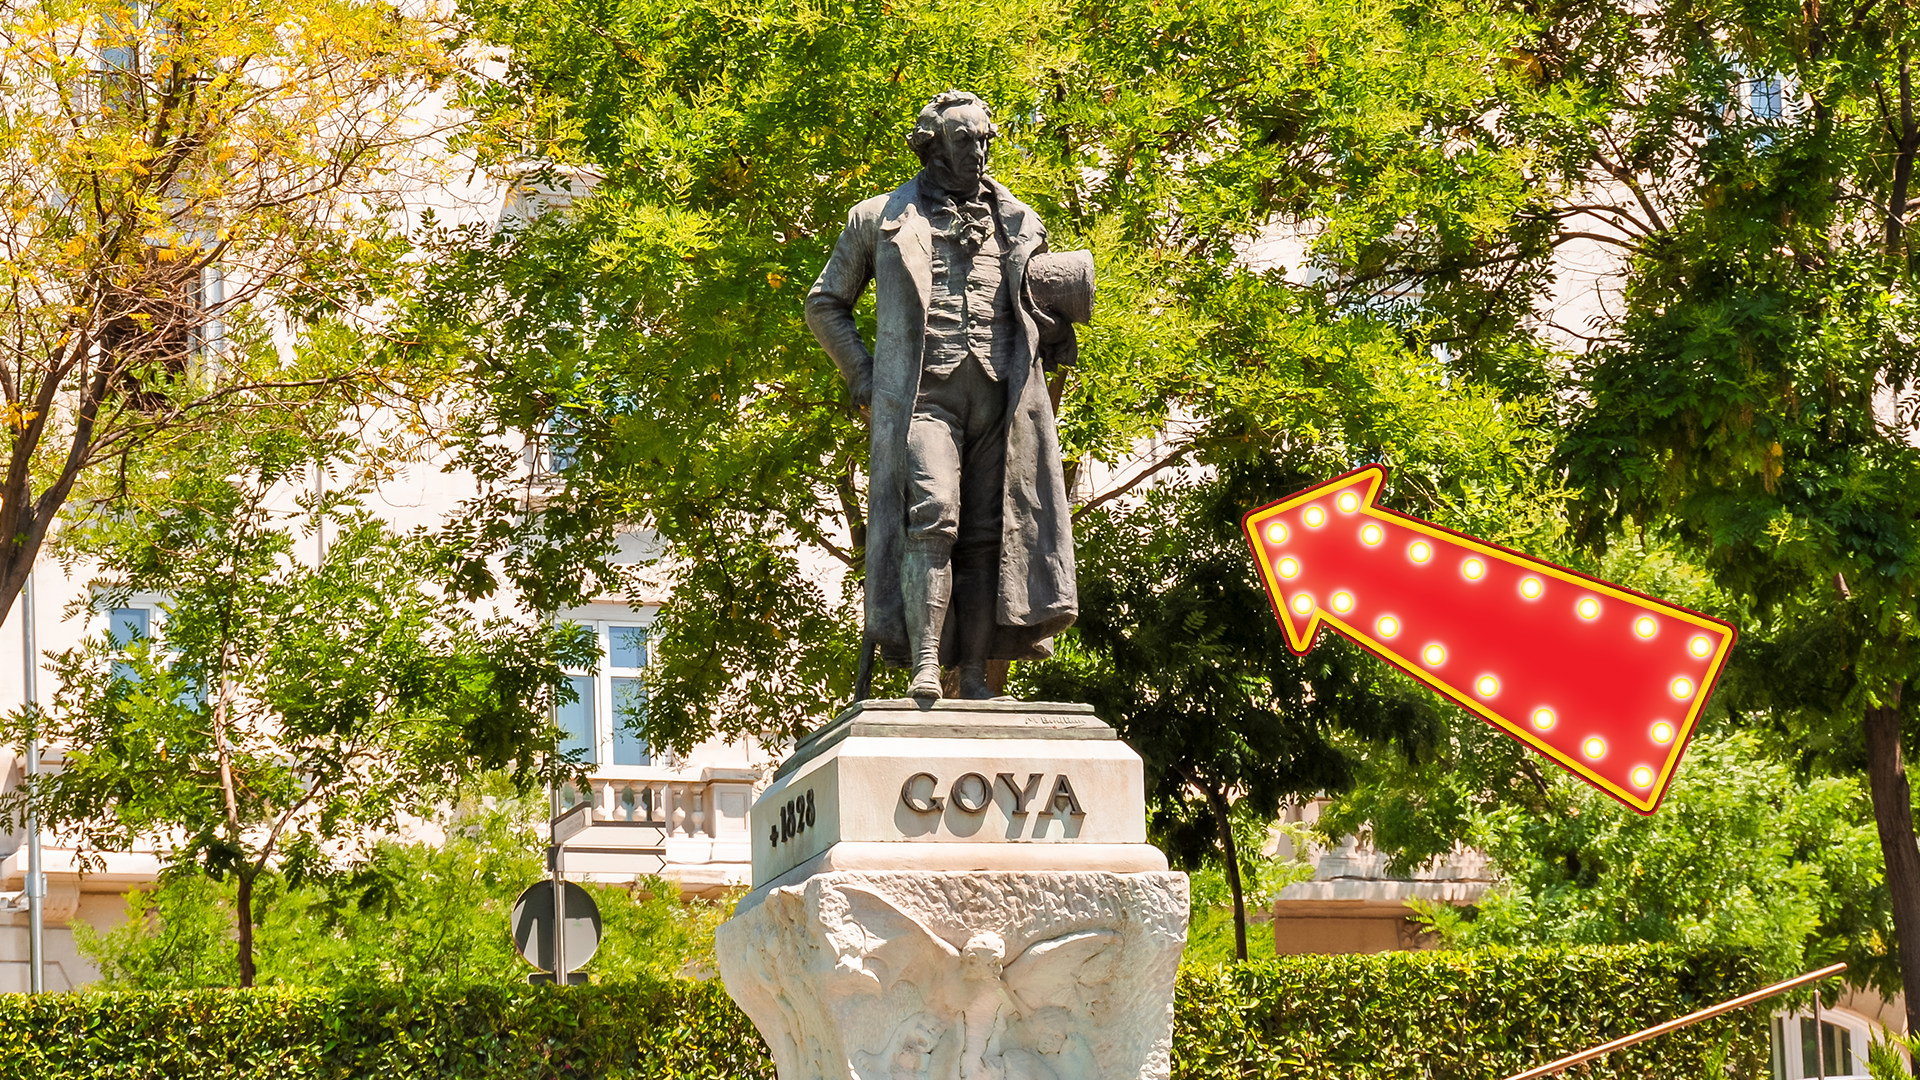 Statue of Goya with arrow 